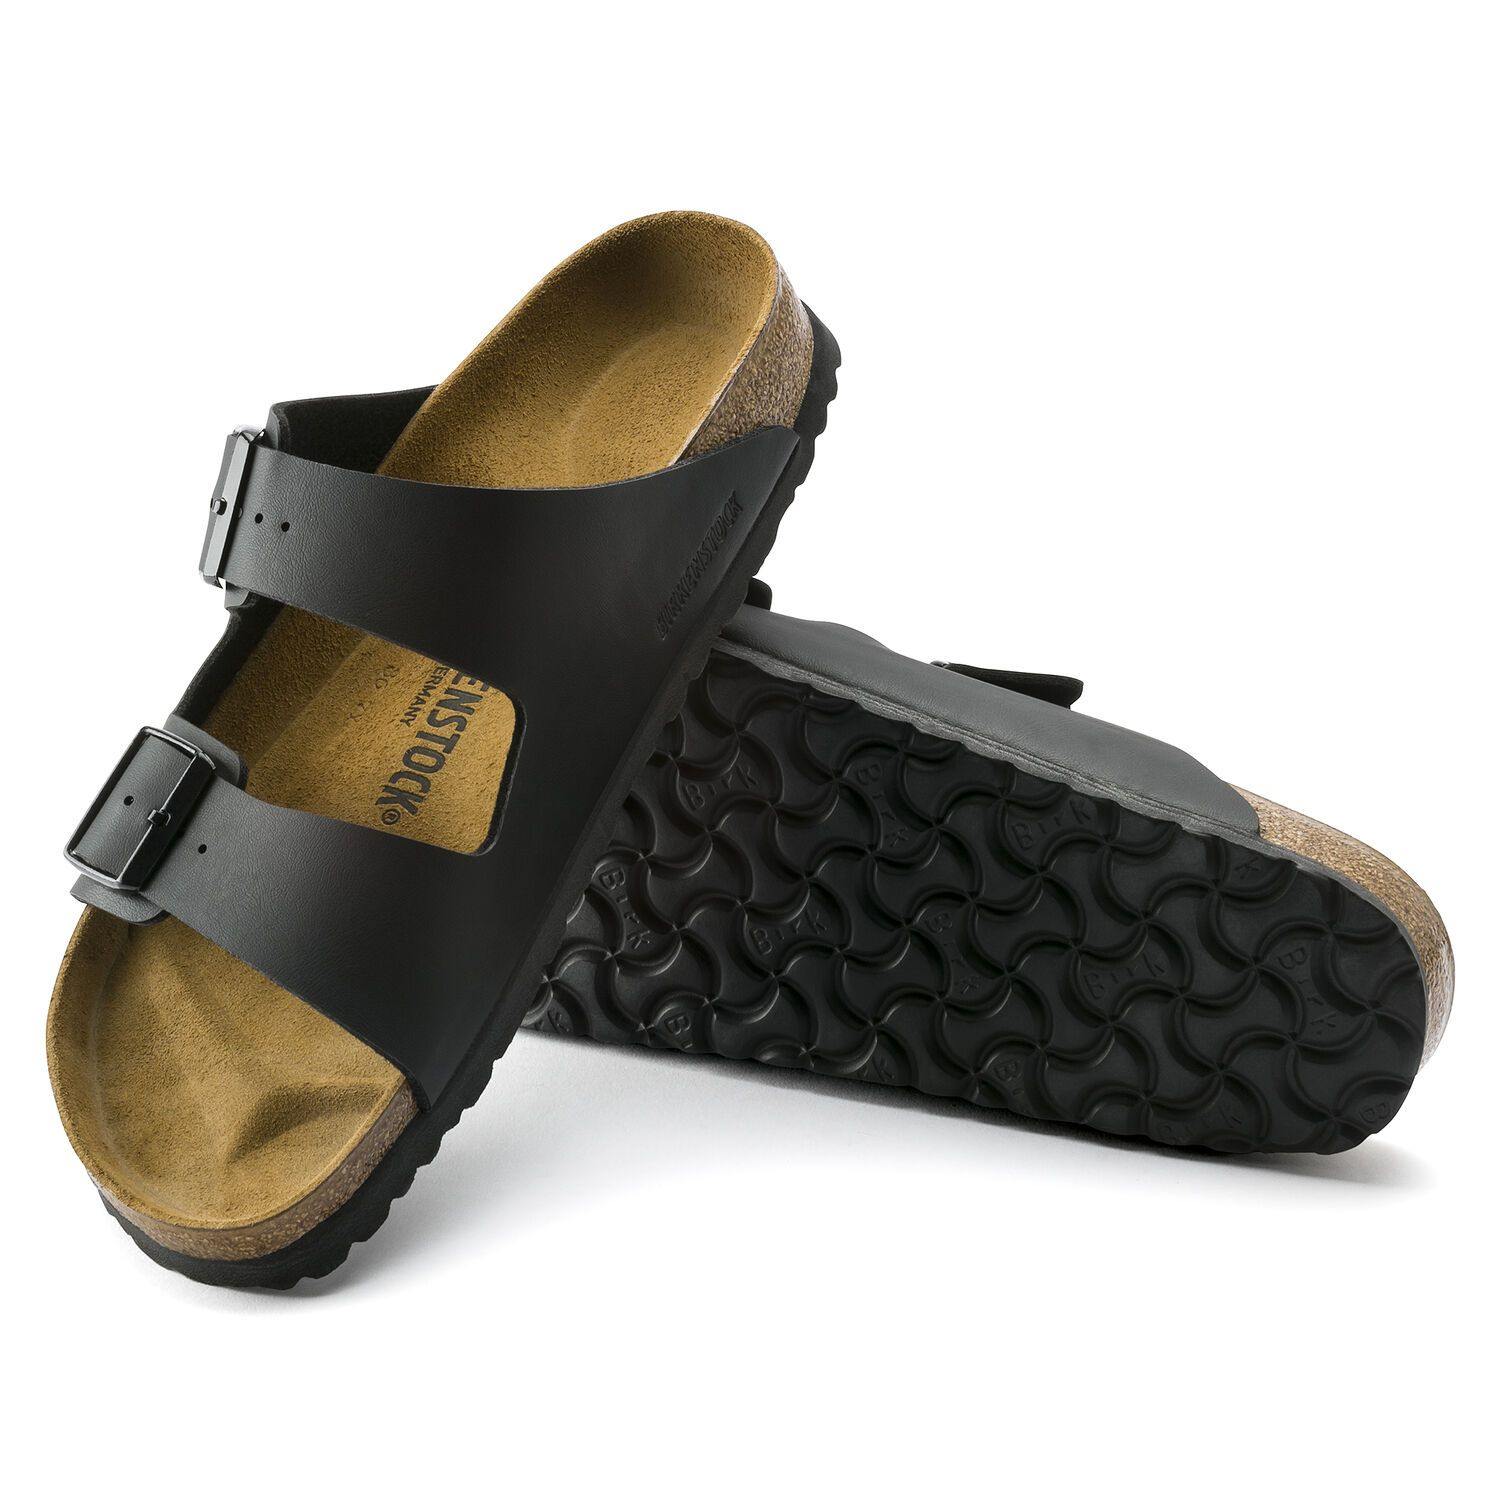 Arizona BS - Black - Bel Ami calzature